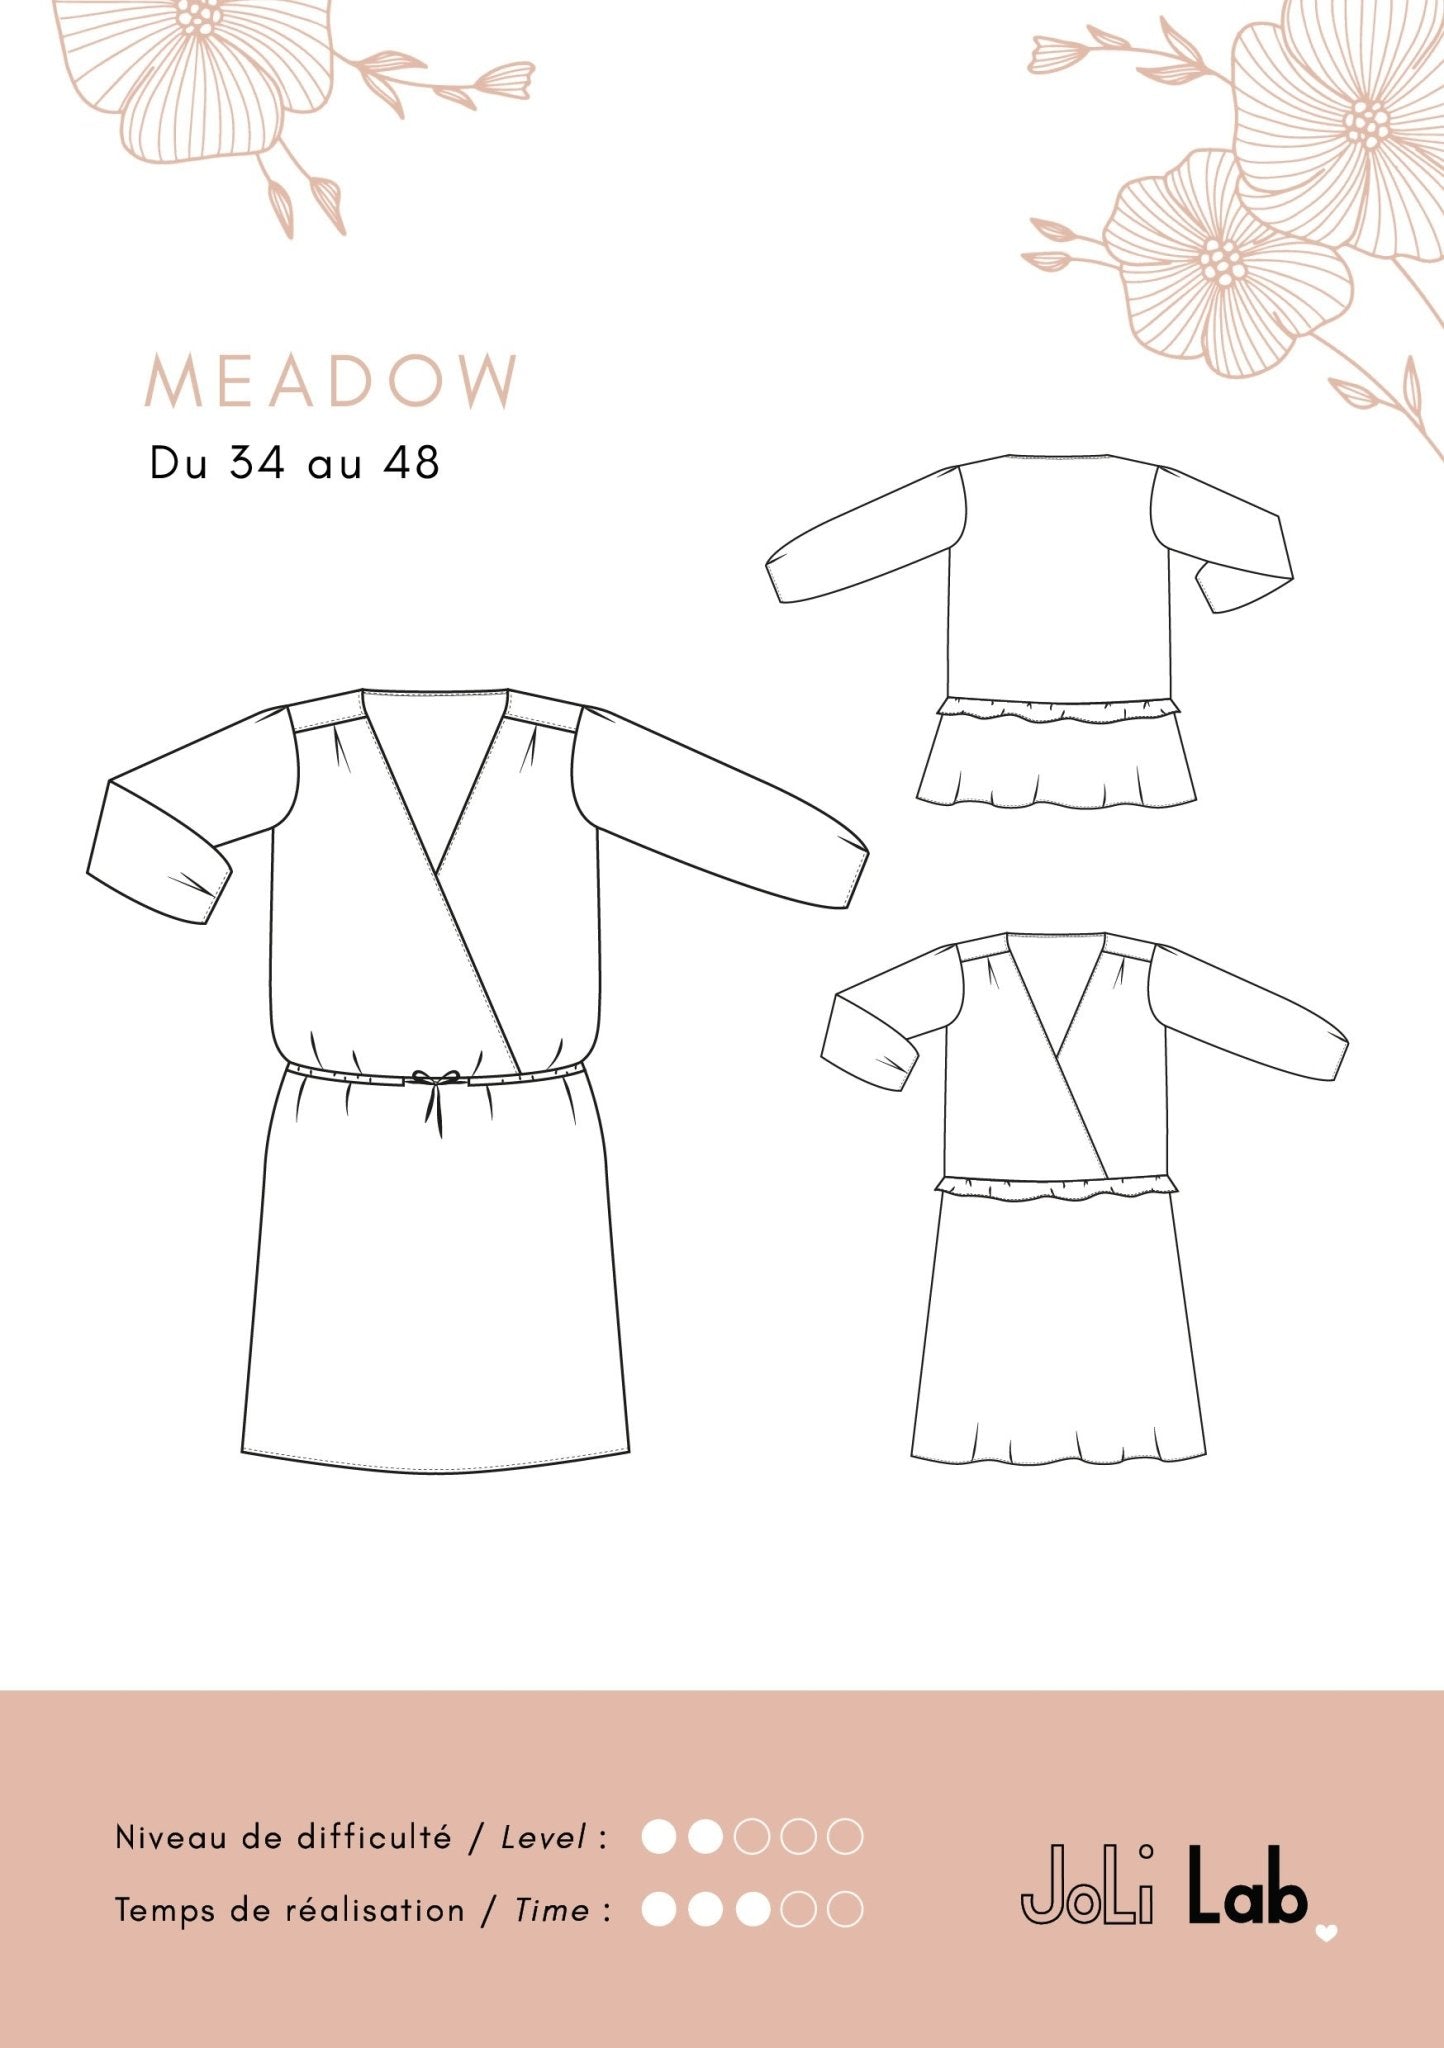 Meadow Dress / Blouse - pattern PDF or paper - Joli Lab